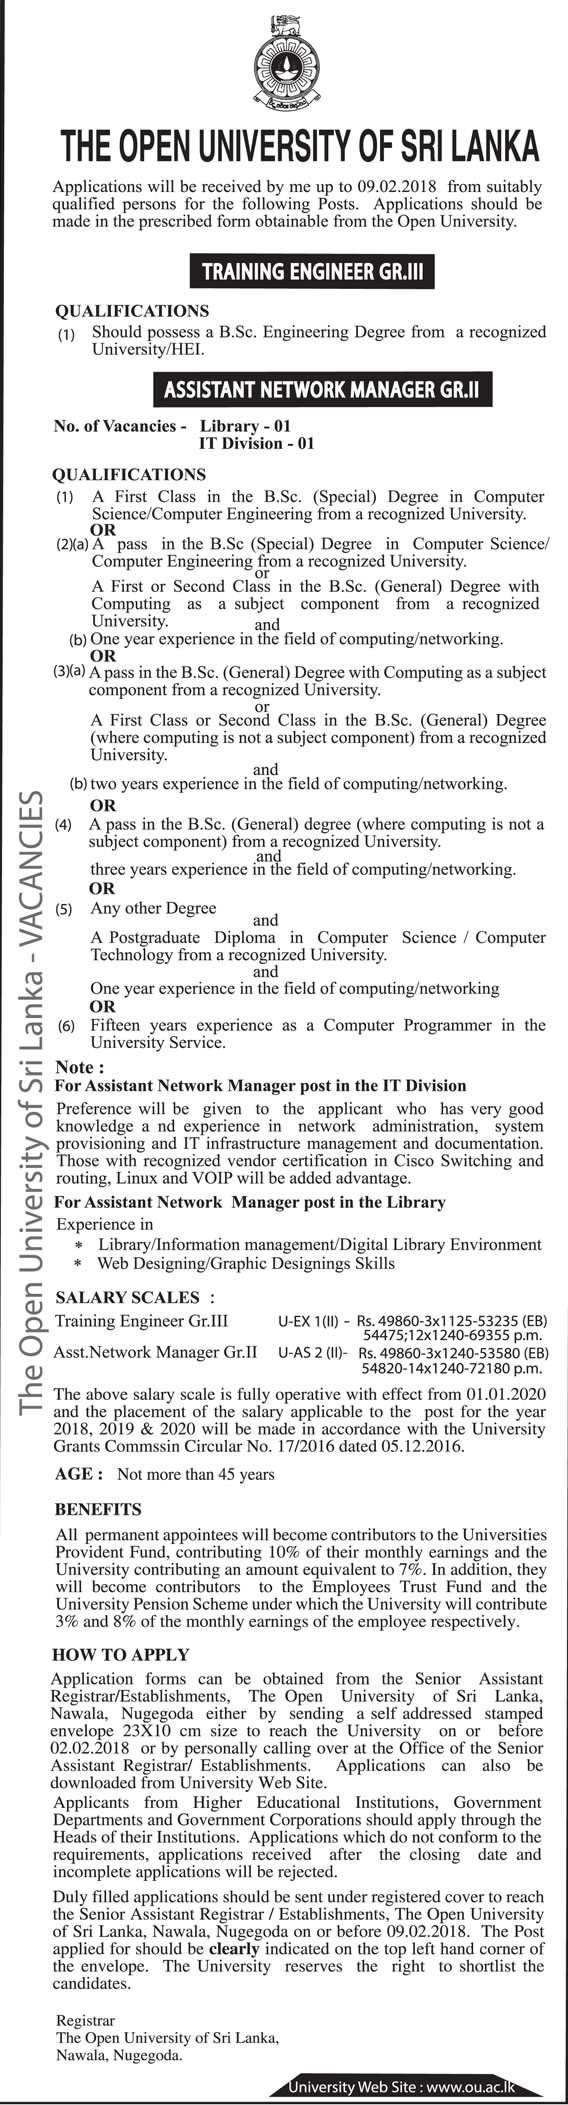 Training Engineer / Assistant Network Manager - Open University of Sri Lanka